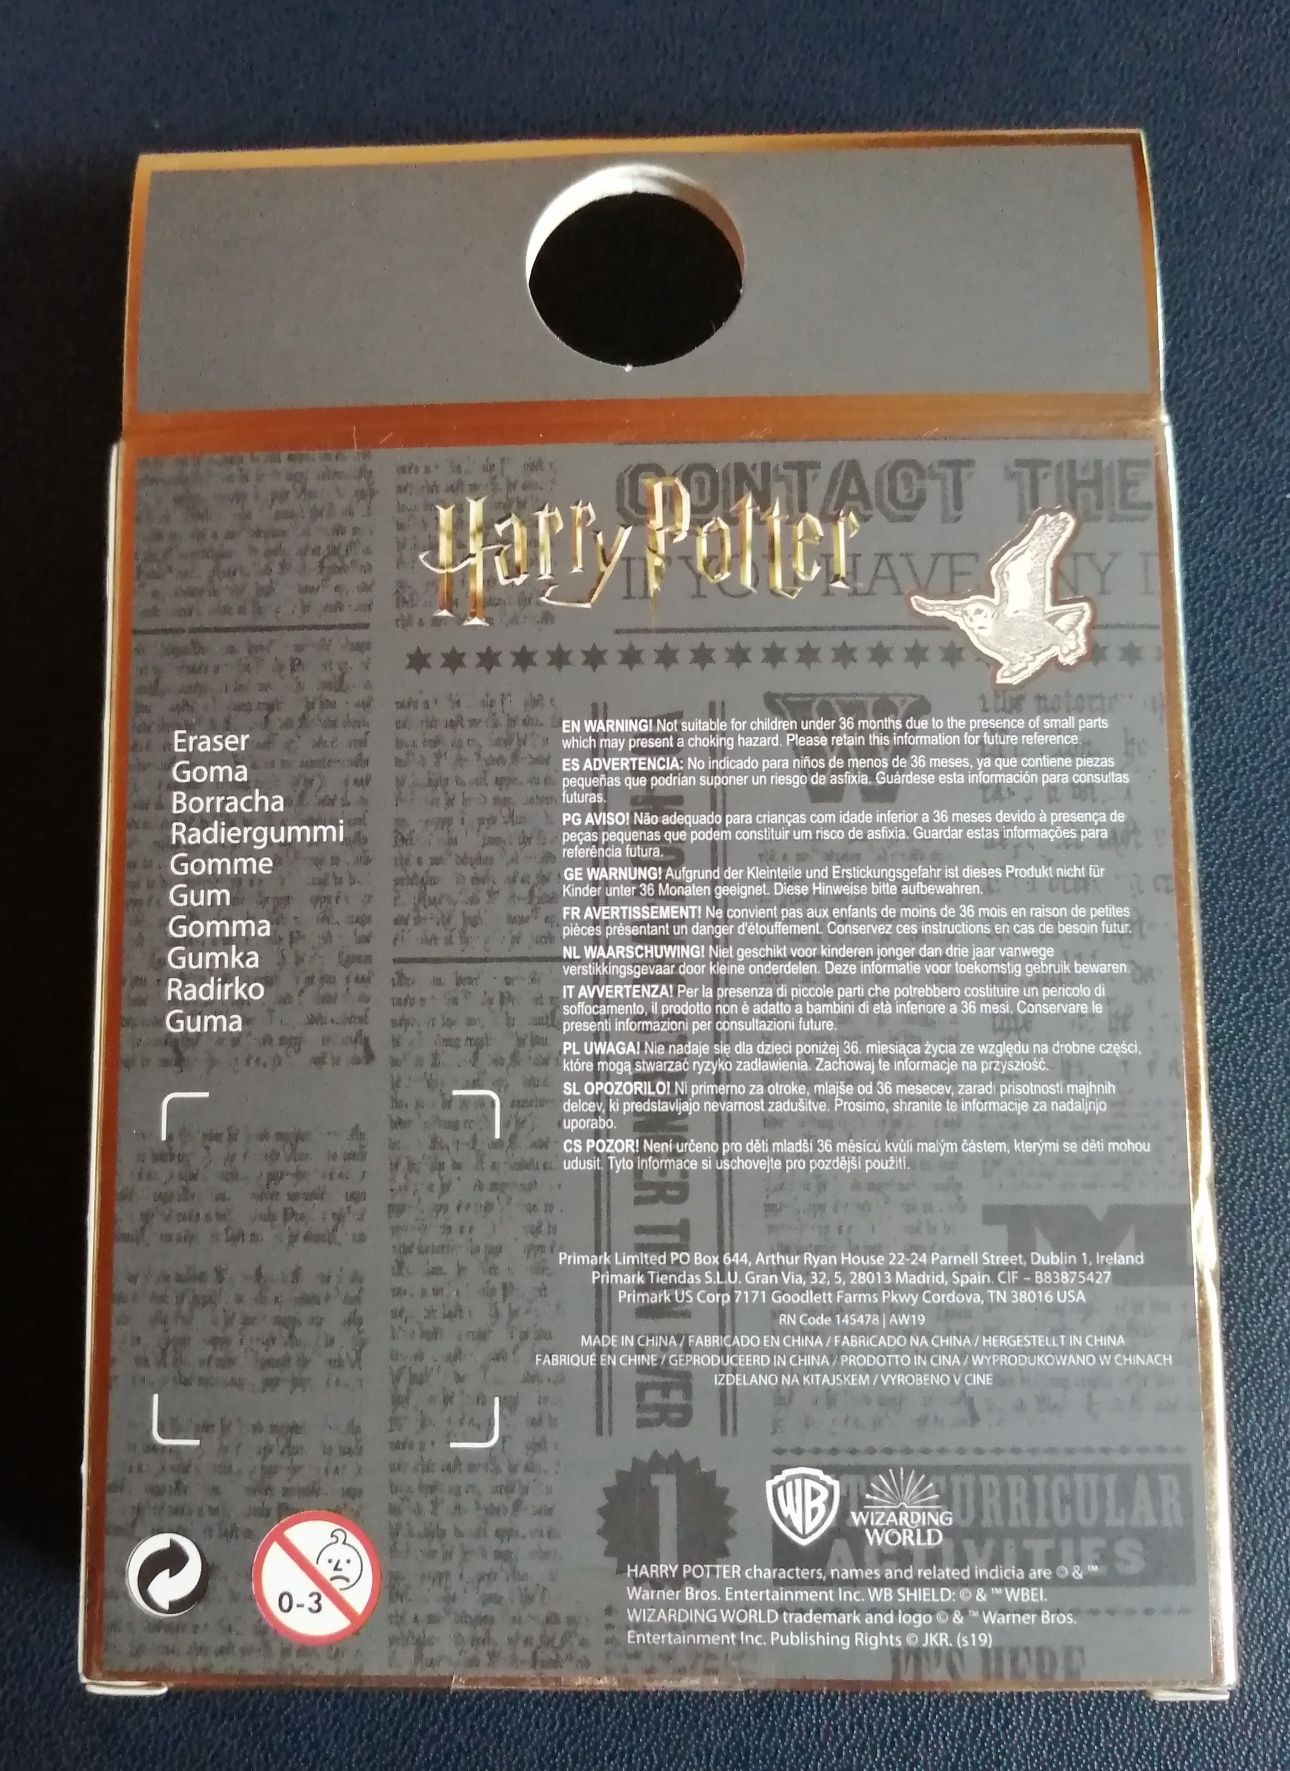 Borracha Hedwig Harry Potter (oferta dos portes)